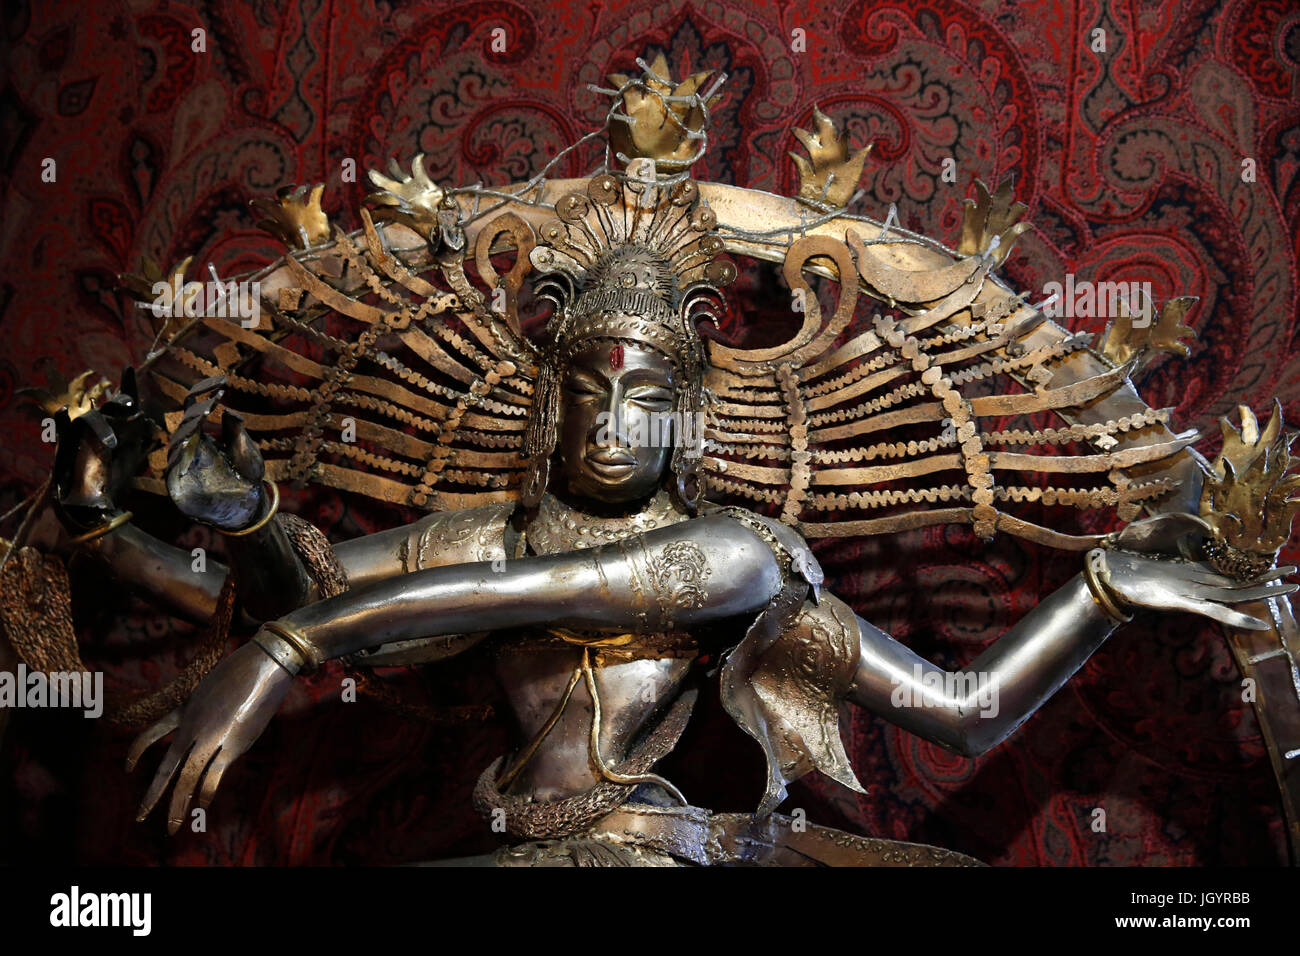 Statue depicting Shiva Nataraja (Dancing Shiva). France. Stock Photo